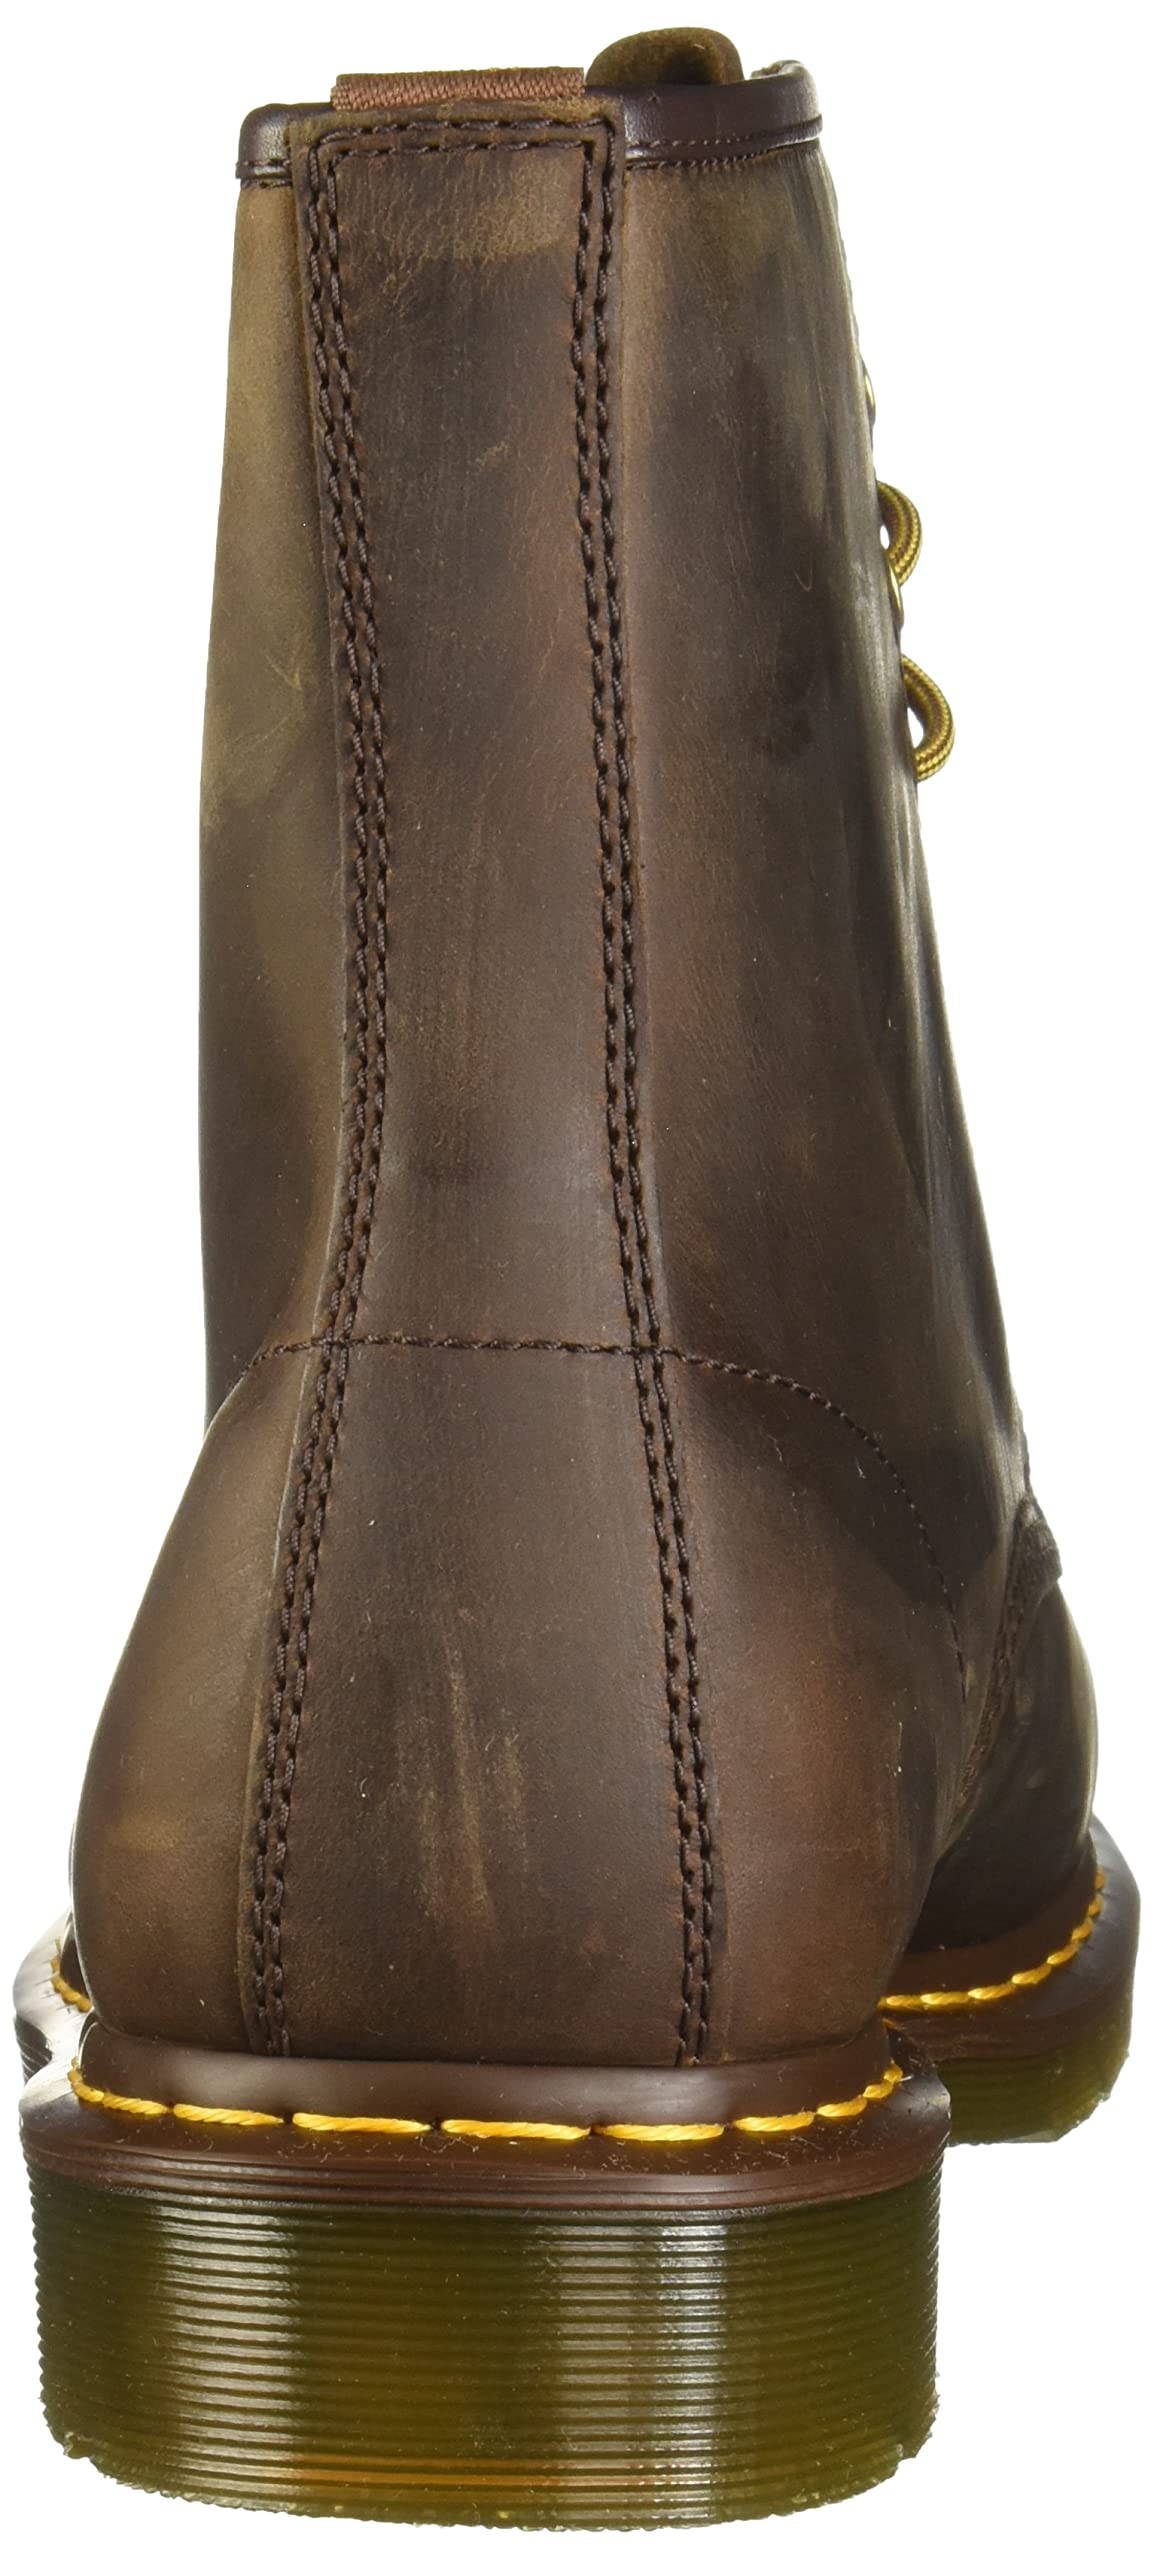 Dr. Martens Unisex 1460 Crazy Horse Leather Boots